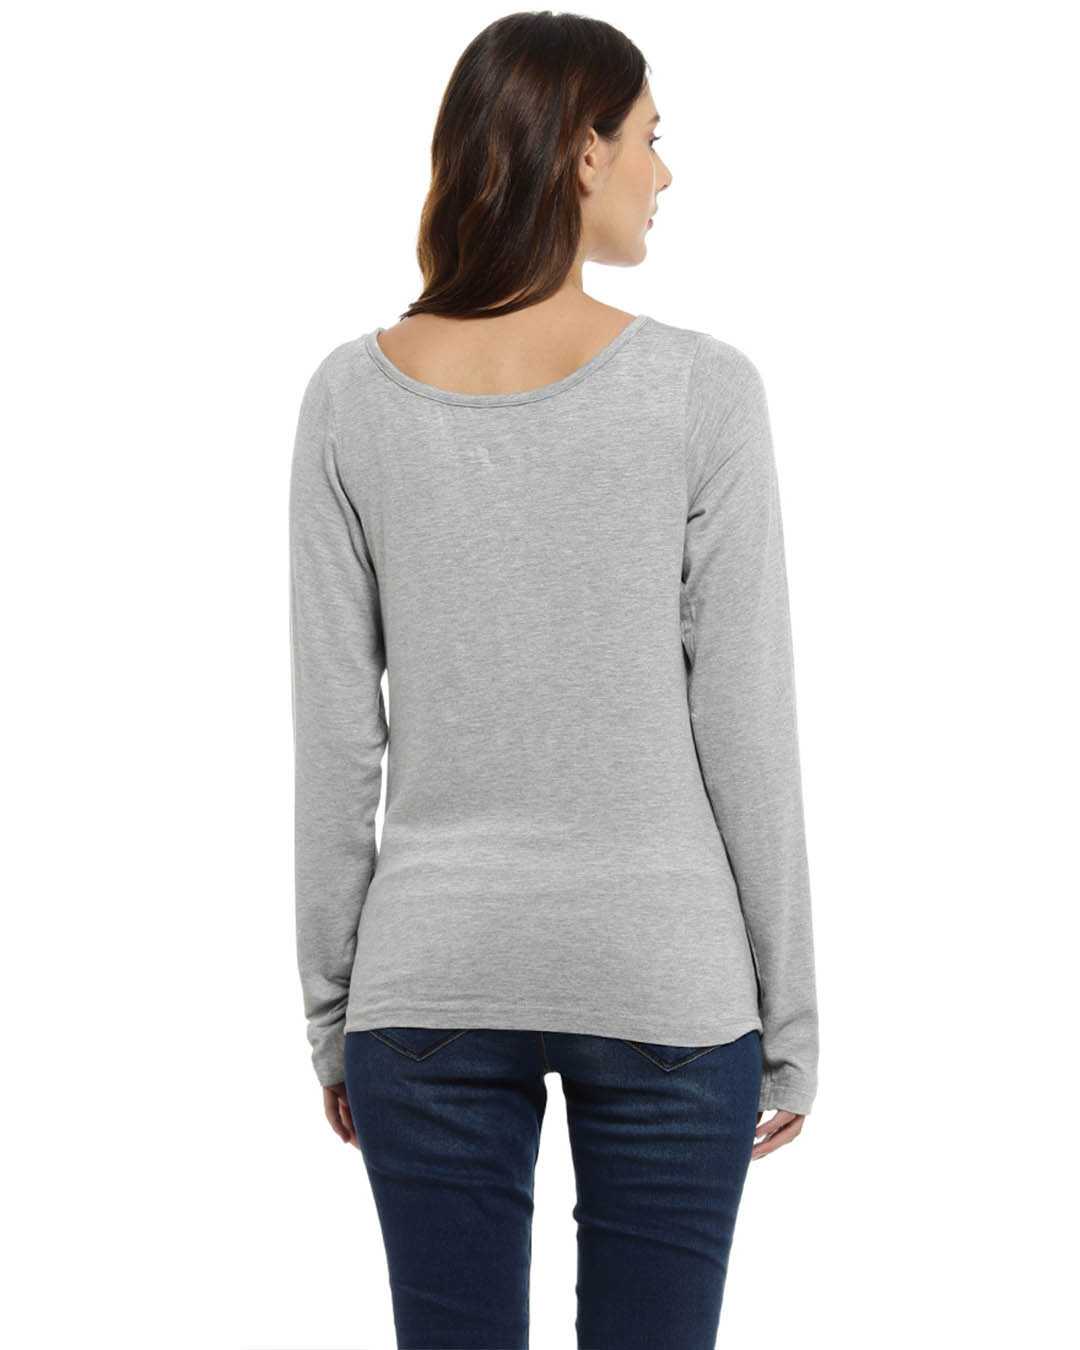 Shop Casual Full Sleeve Printed Women Grey Top-Back